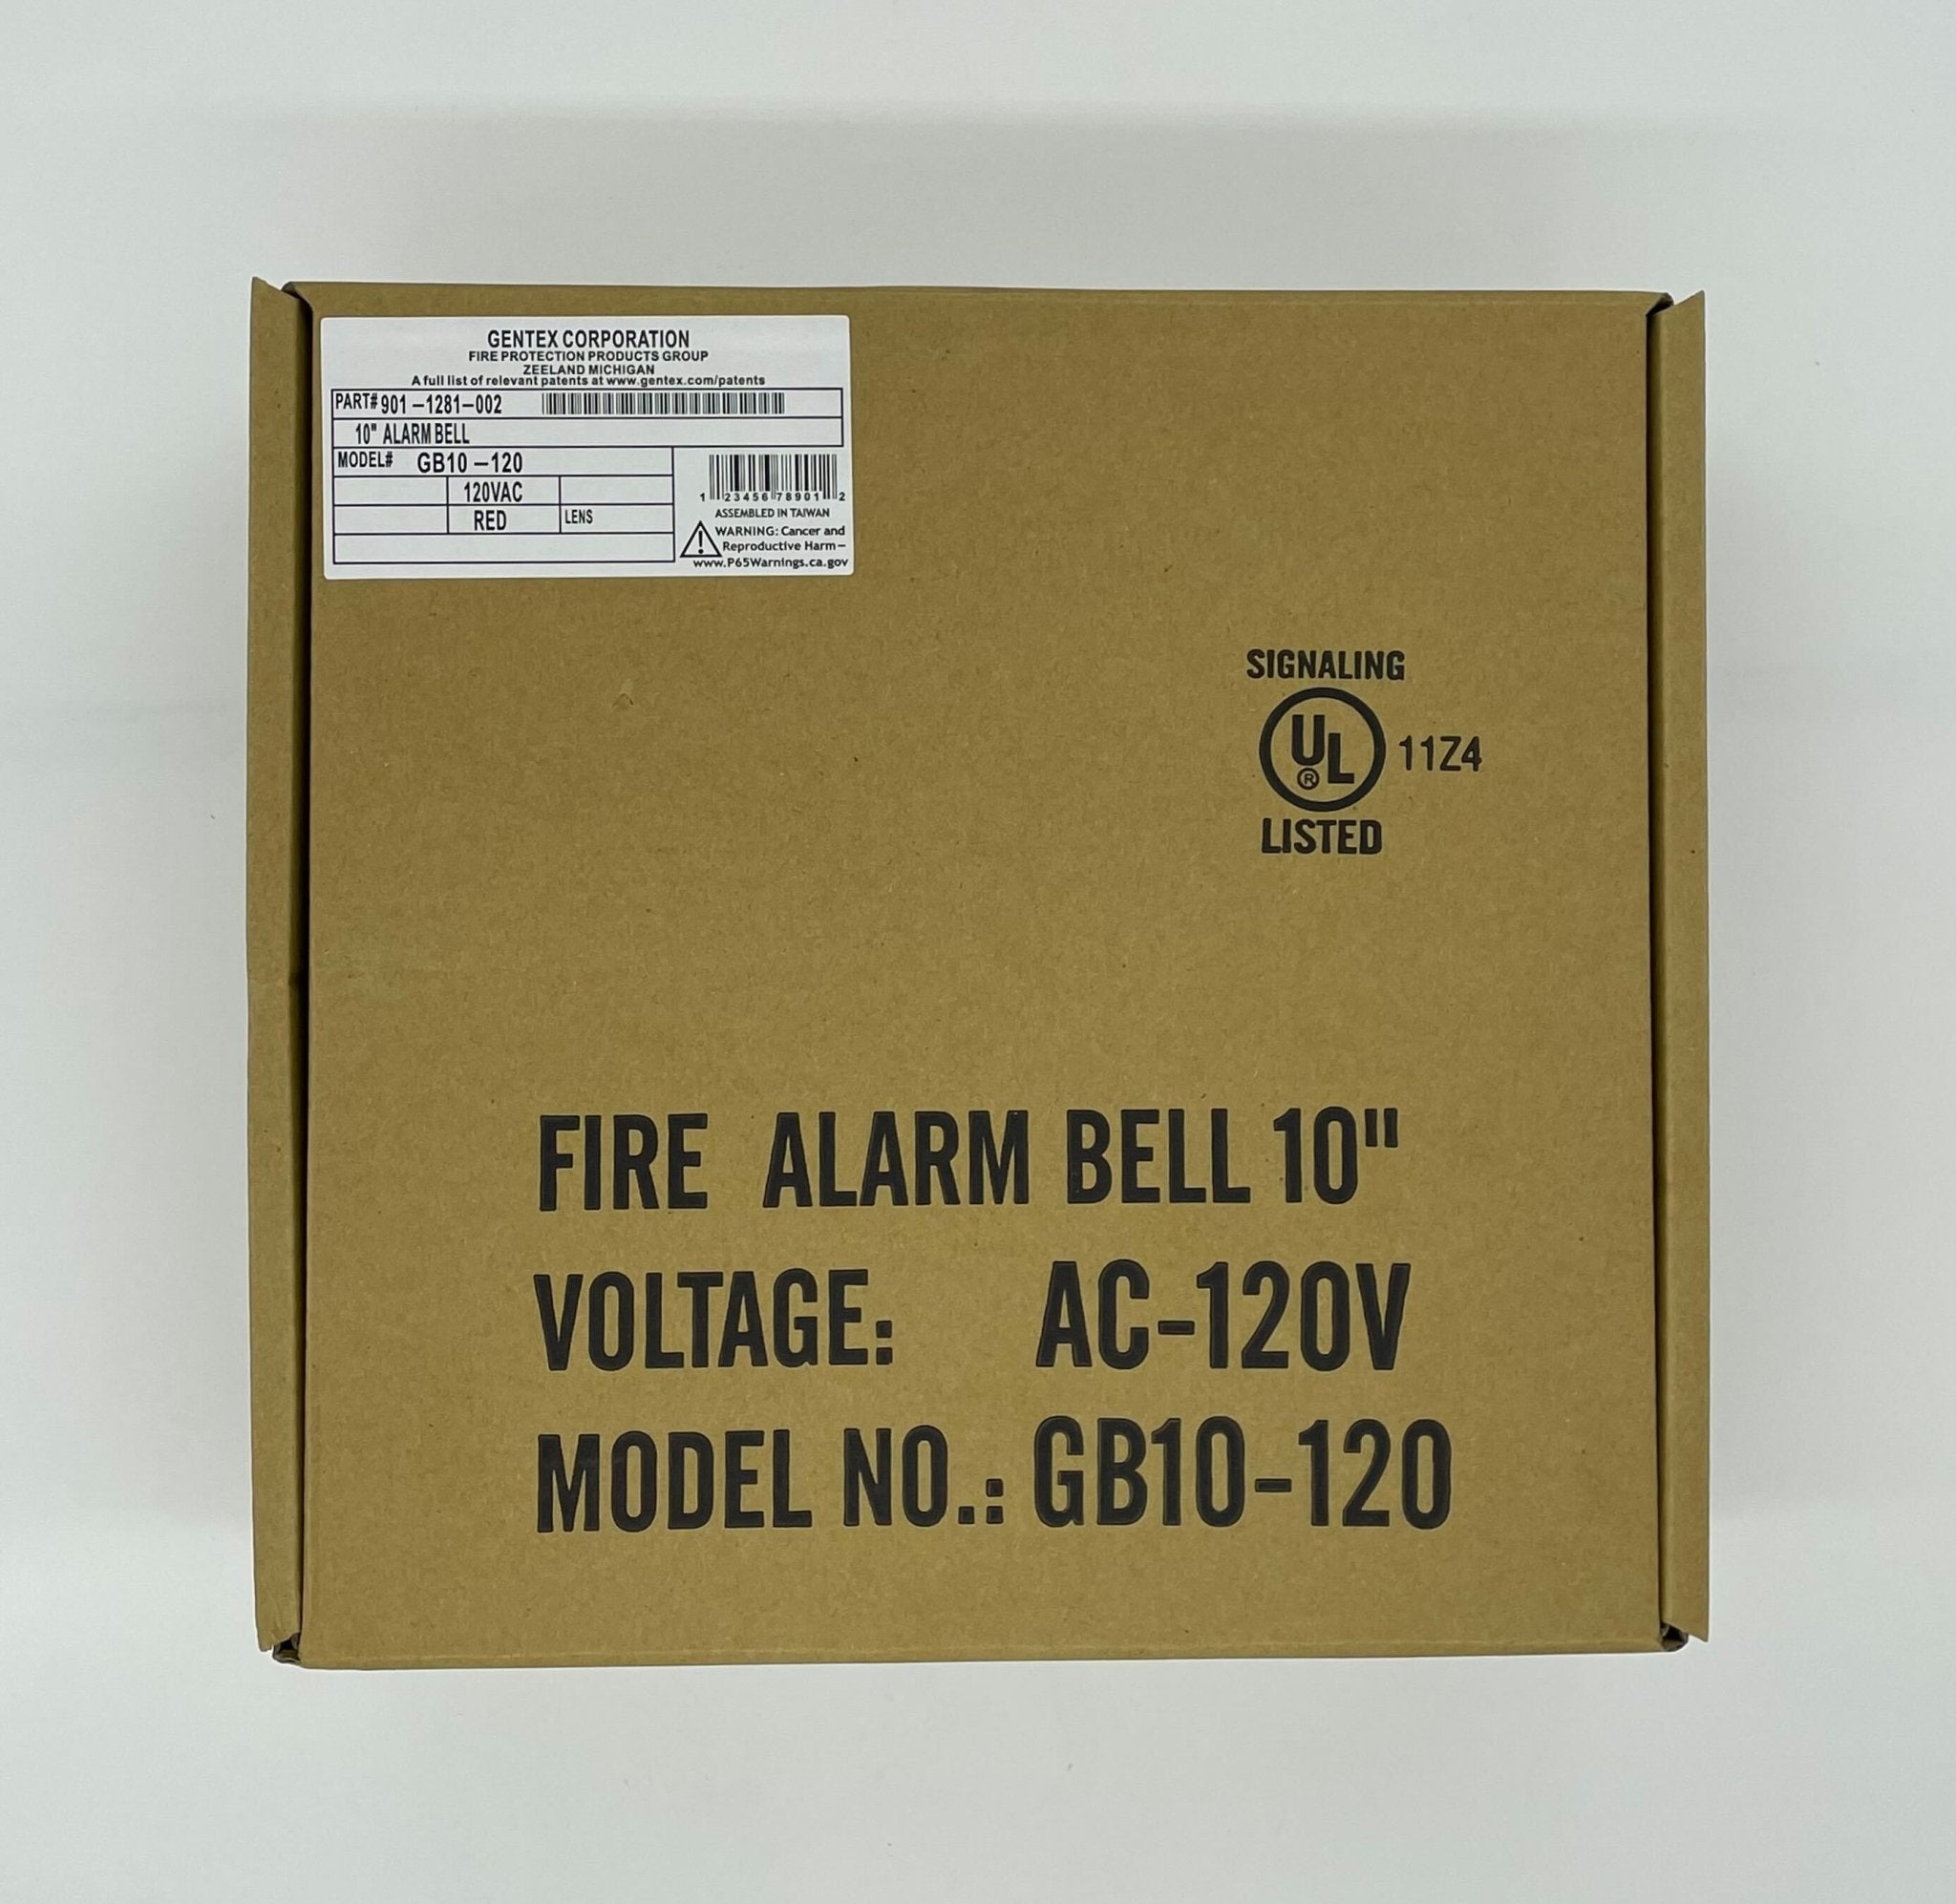 Gentex GB10-120 10" Fire Alarm Bell, 90 dBA at 10', Red Metal Finish - The Fire Alarm Supplier